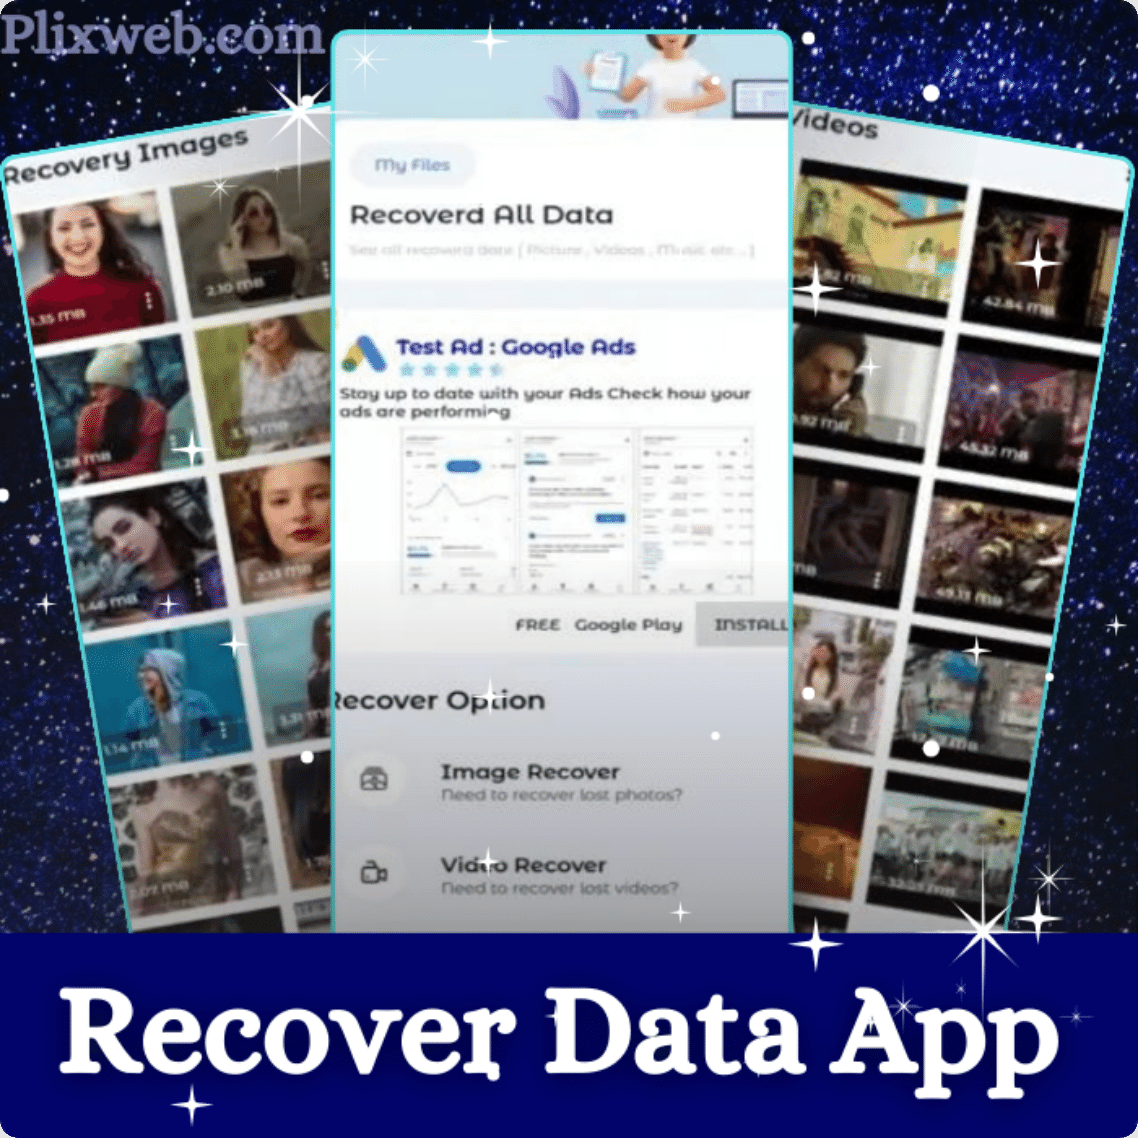 Recover Data App Development